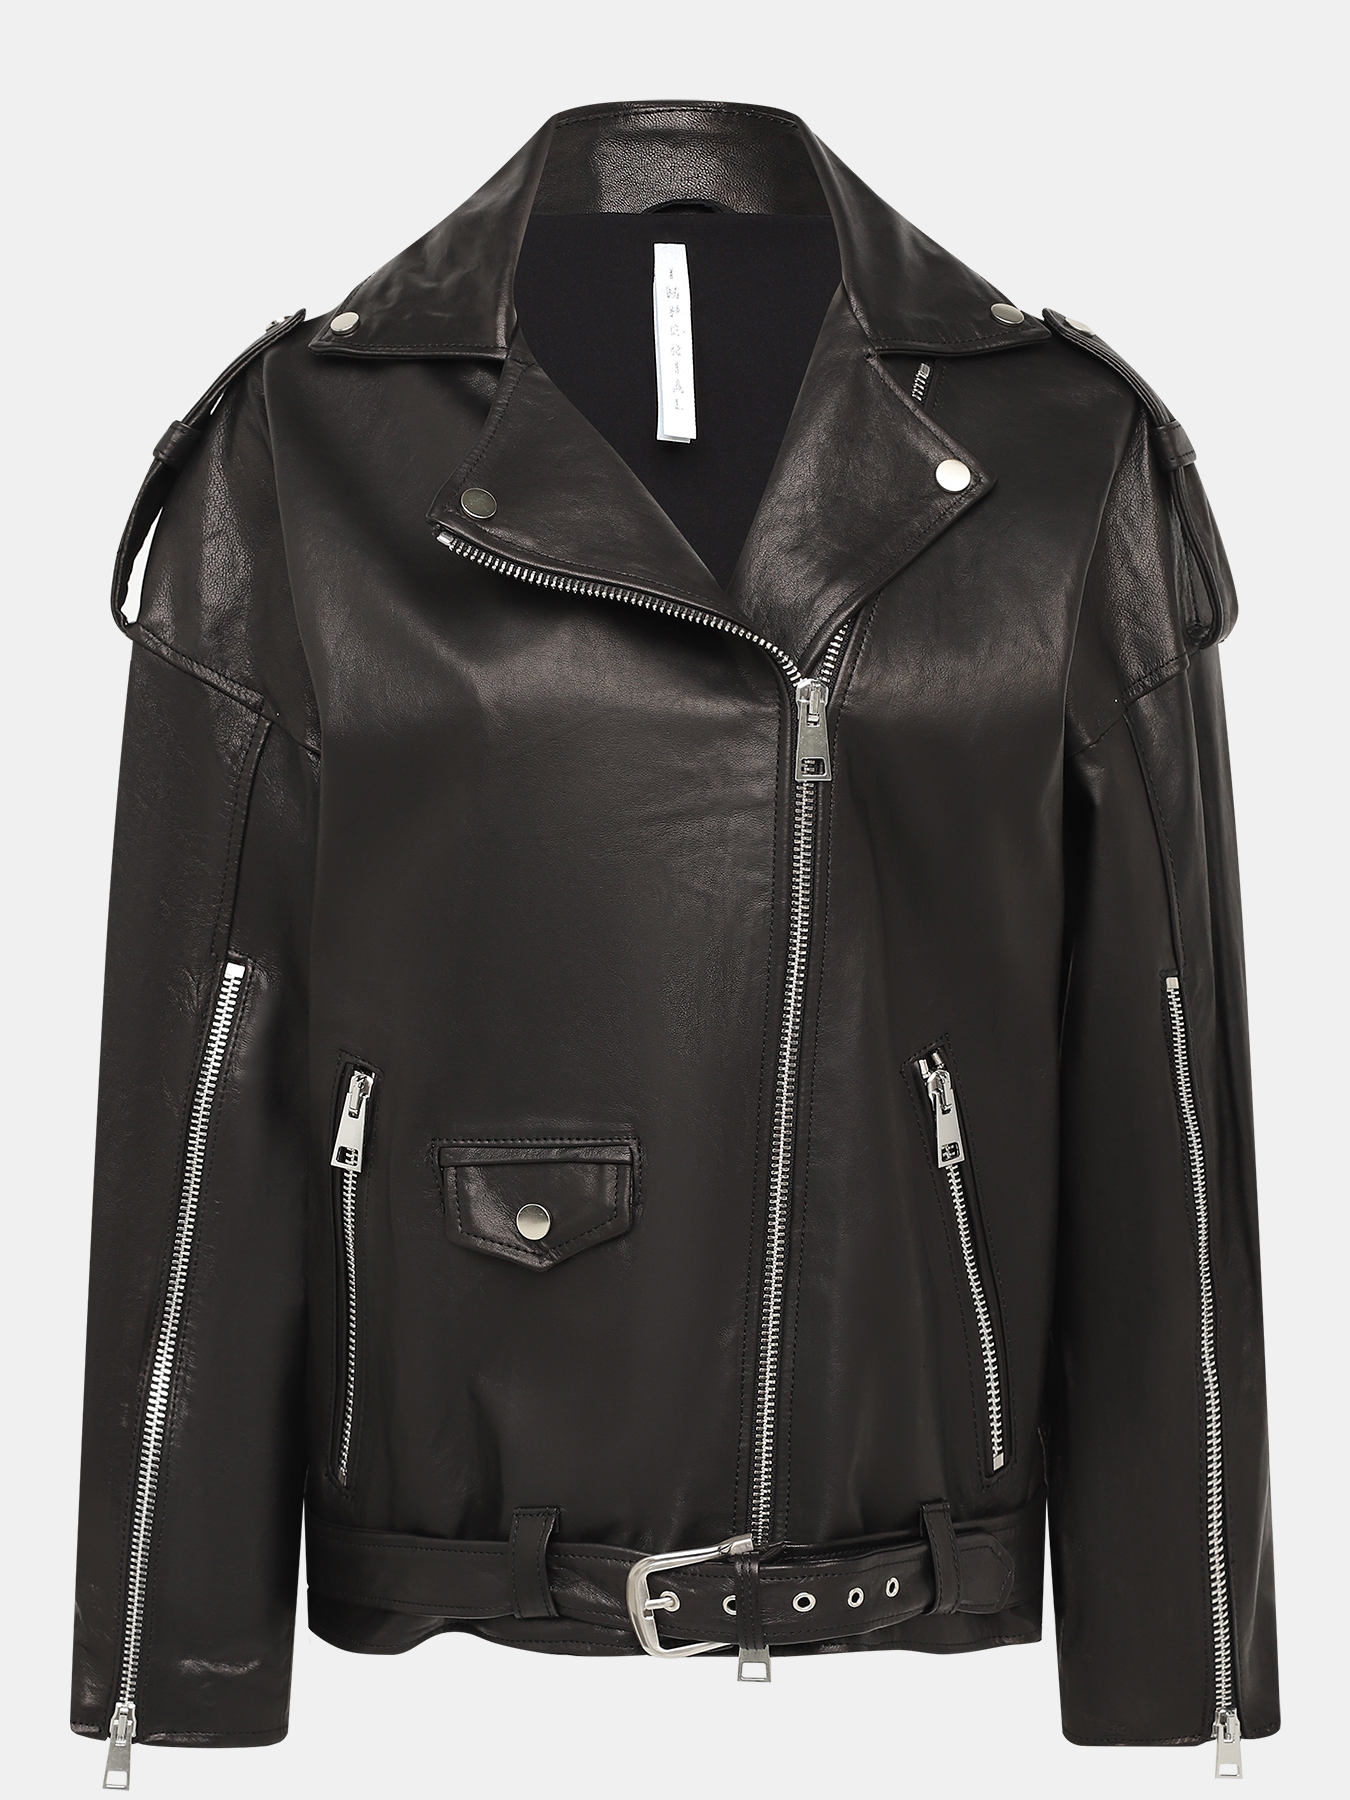 Кожаная куртка Imperial 424361-042, цвет черный, размер 42-44